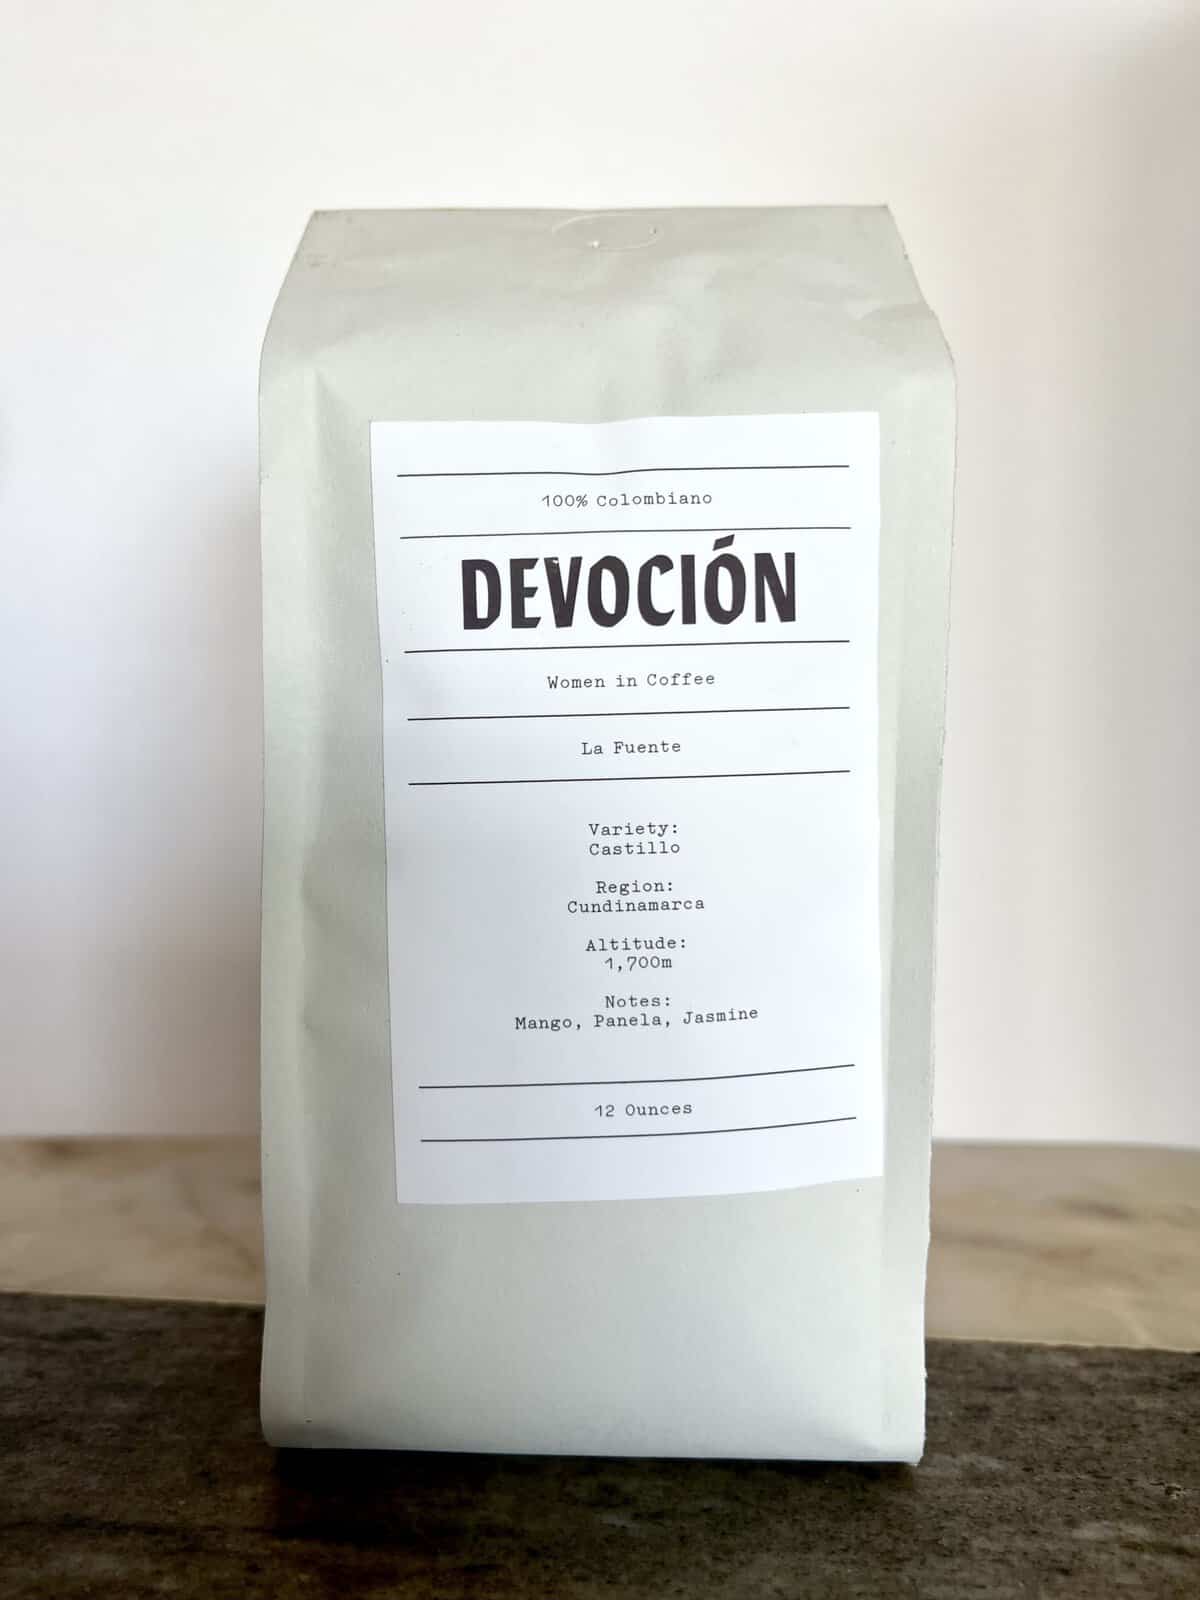 Packaging-Devocion-La-Fuente-Women-in-Coffee-scaled